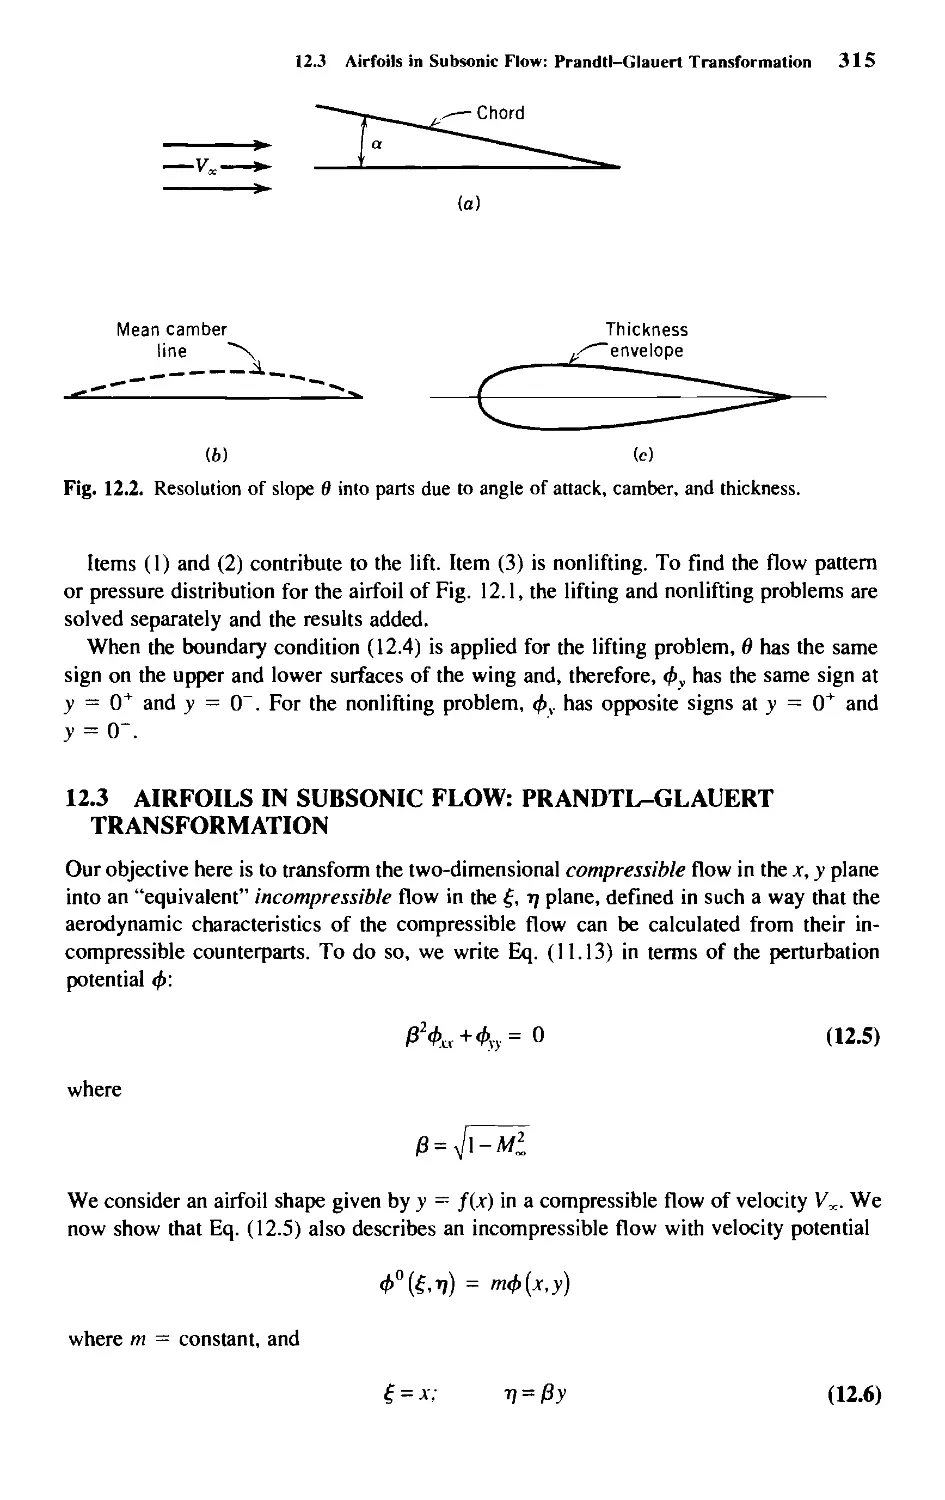 12.3 - Airfoils in Subsonic Flow: Prandtl-Glauert Transformation